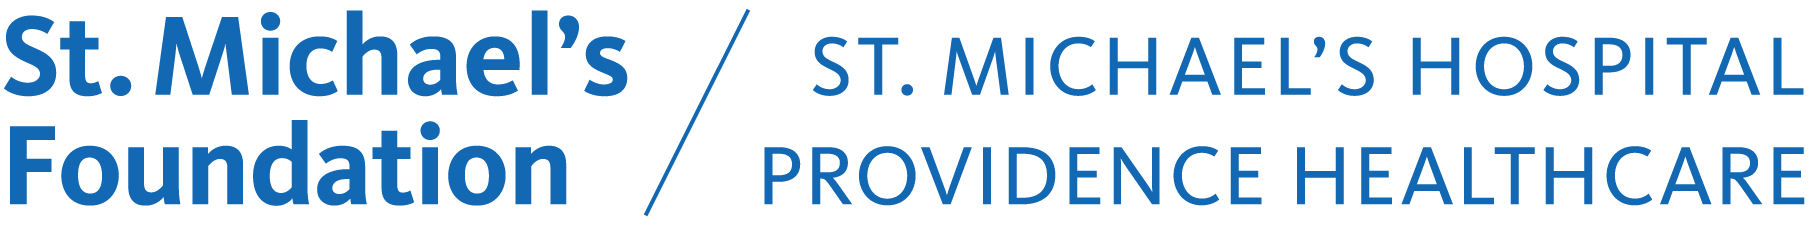 St. Michael's Foundation | St. Michael's Hospital Providence Healthcare